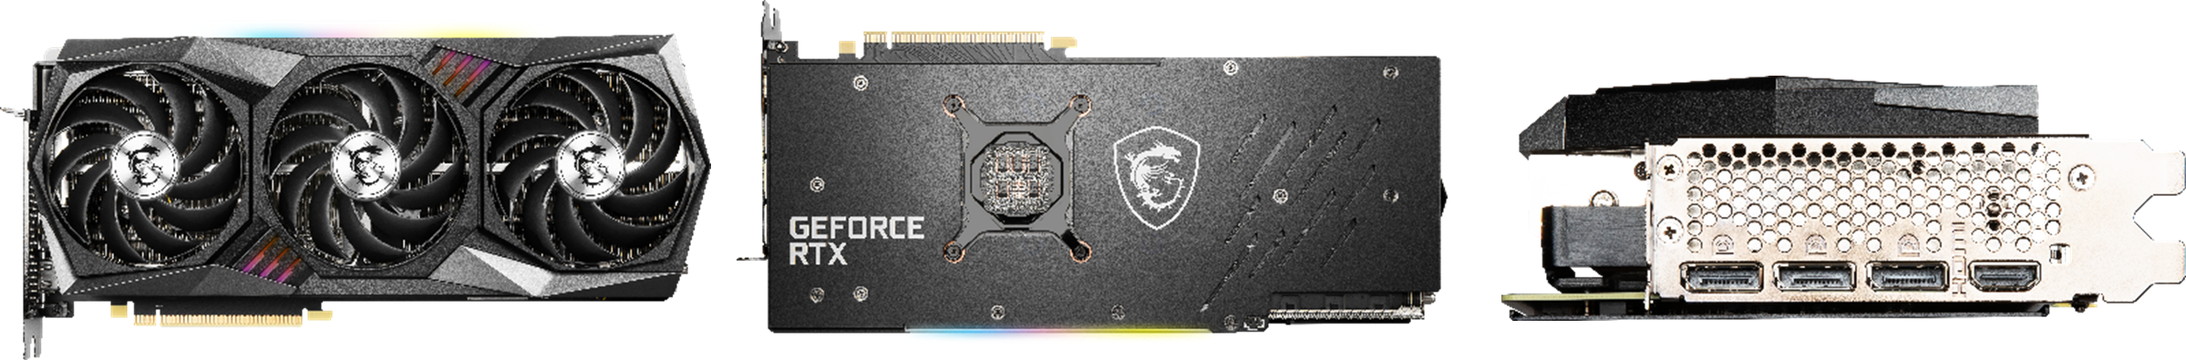 MSI、NVIDIA® GeForce RTX™ 3080を搭載したハイエンドモデル「GeForce 